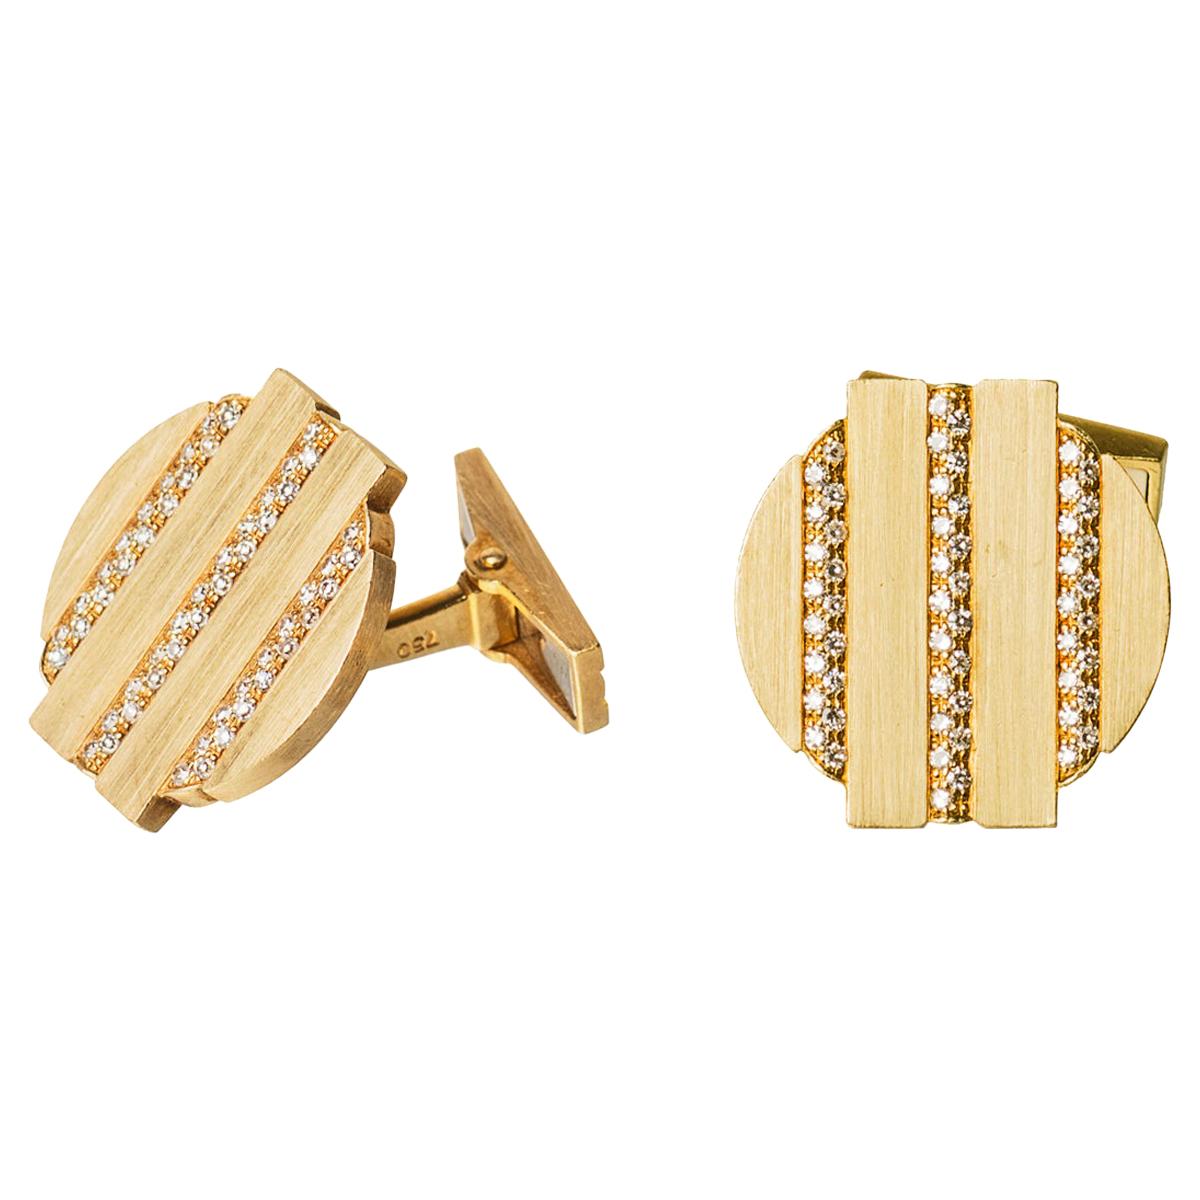 Vintage Cufflinks by Piaget with Diamonds set in 18 Karat Gold, Swiss circa 1975 For Sale